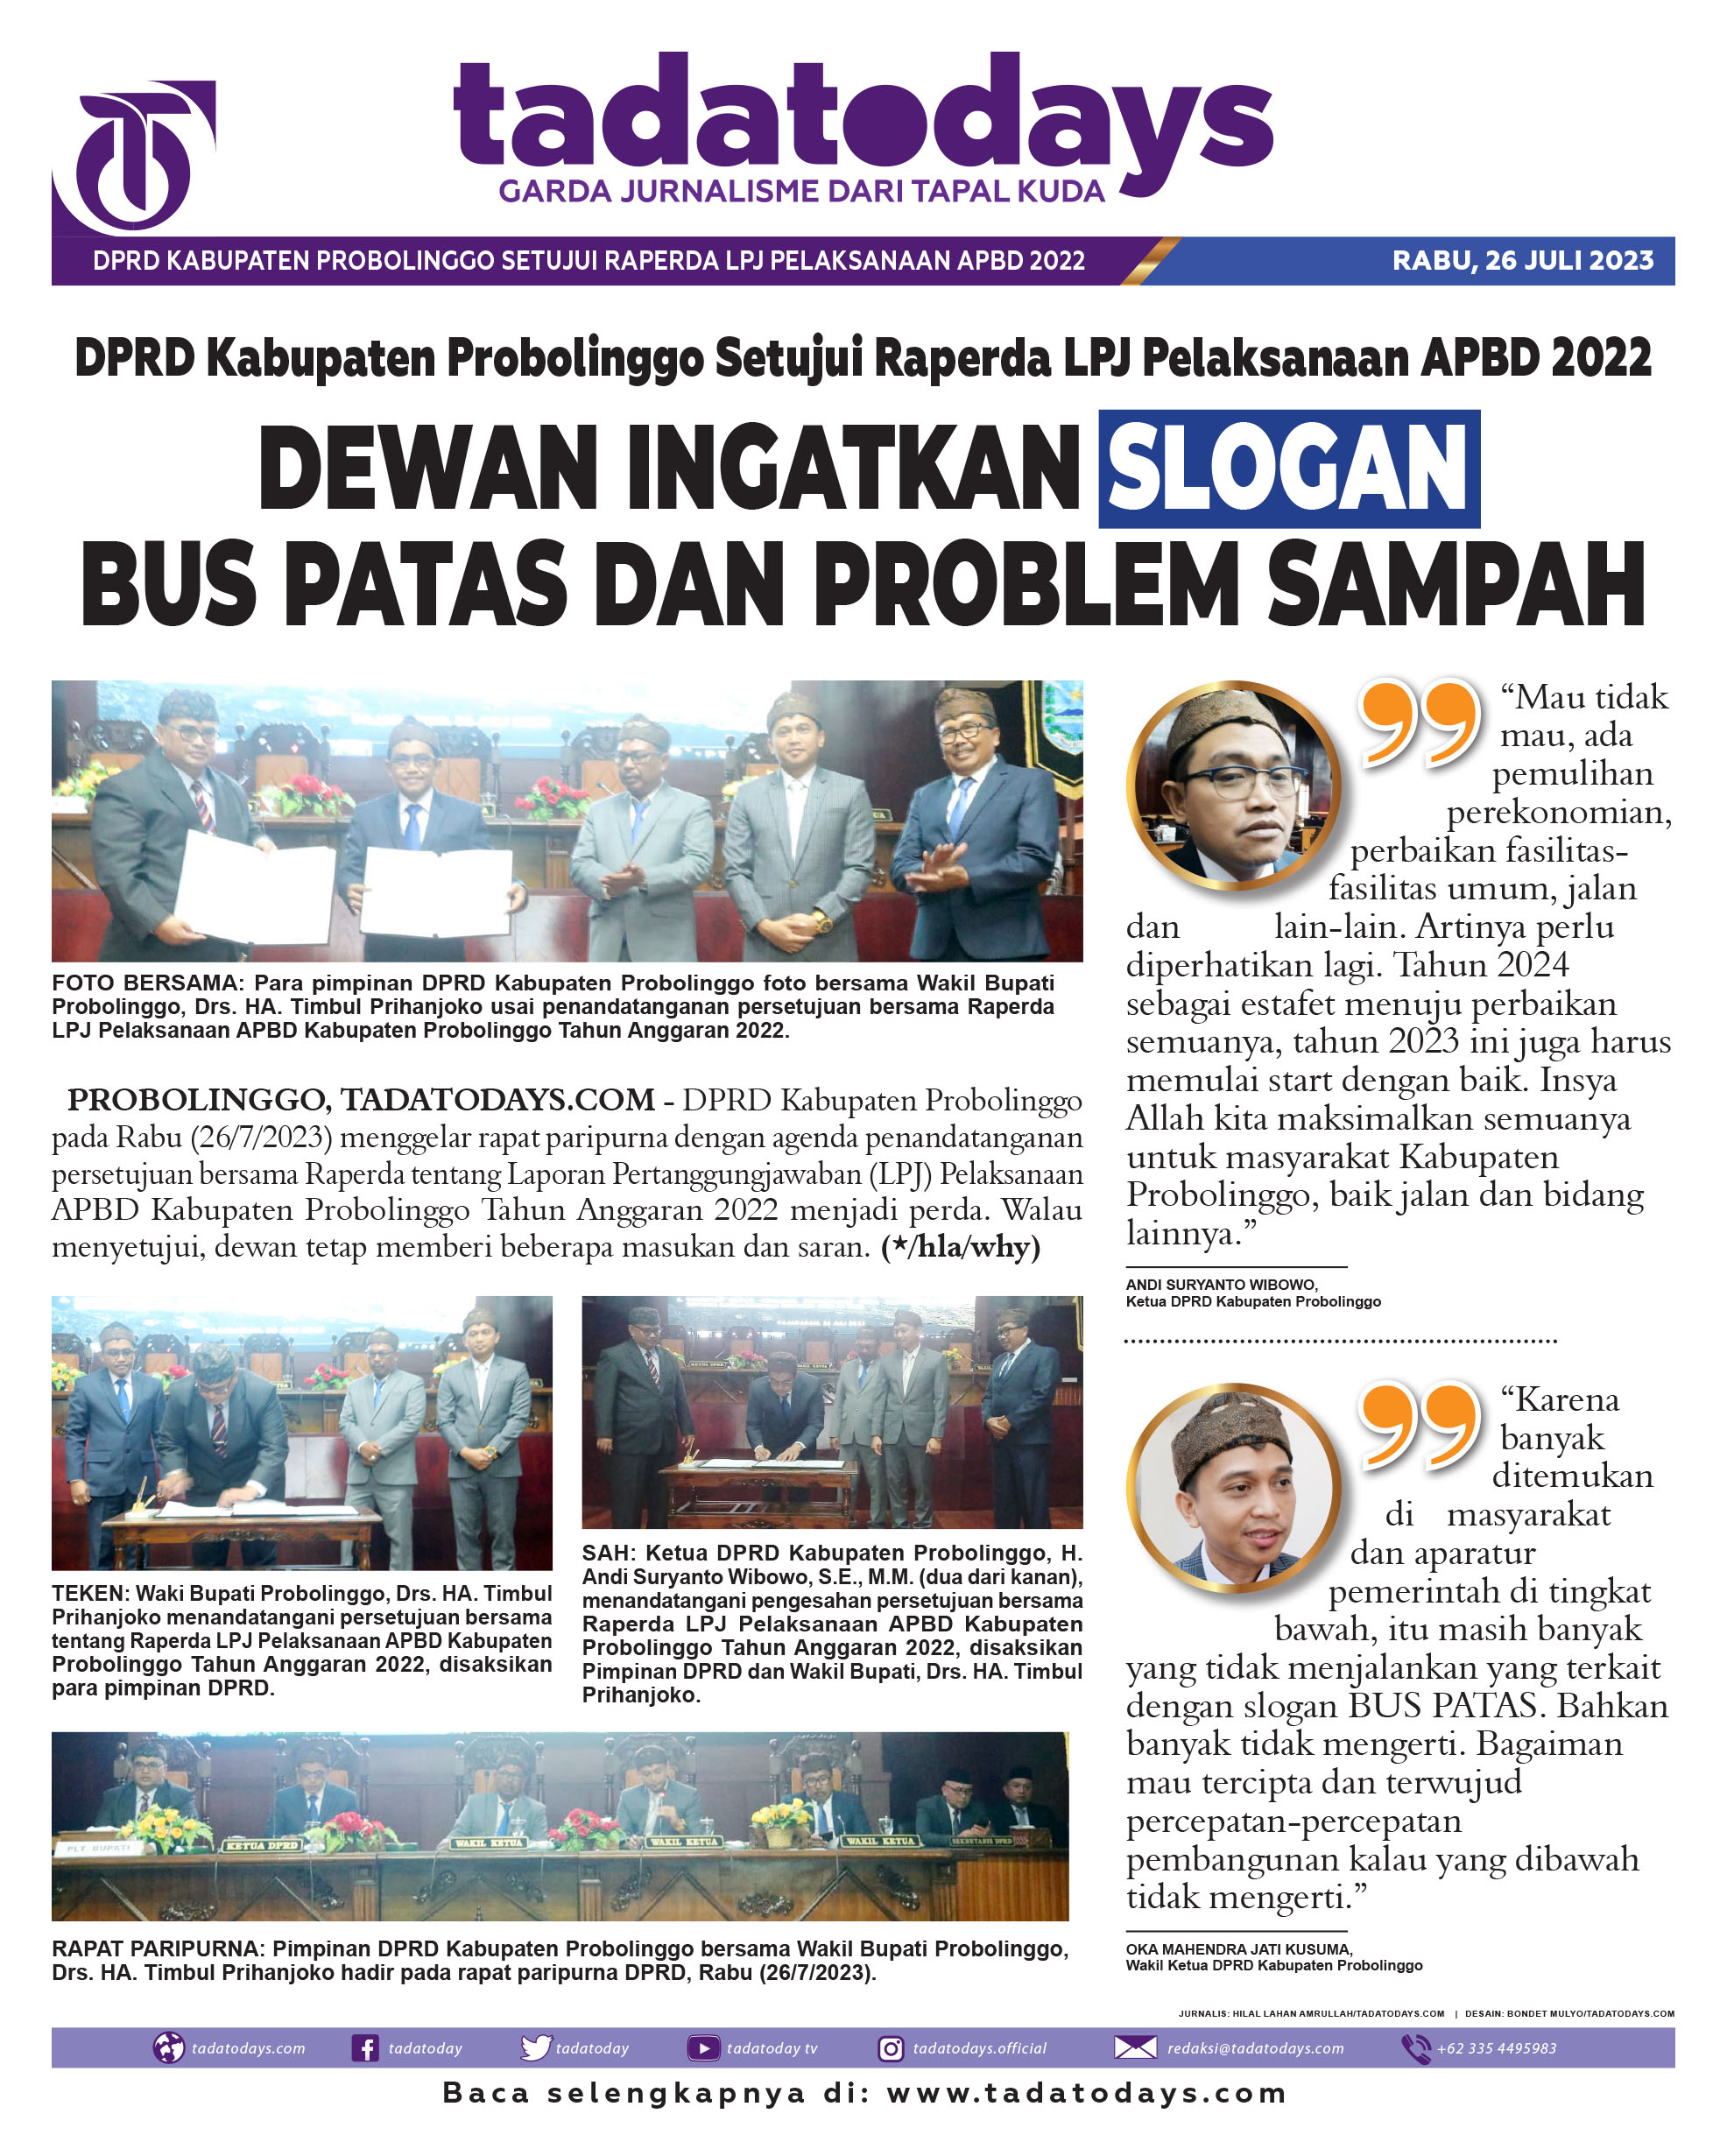 DPRD Kabupaten Probolinggo Menyetujui Raperda LPJ Pelaksanaan APBD 2022